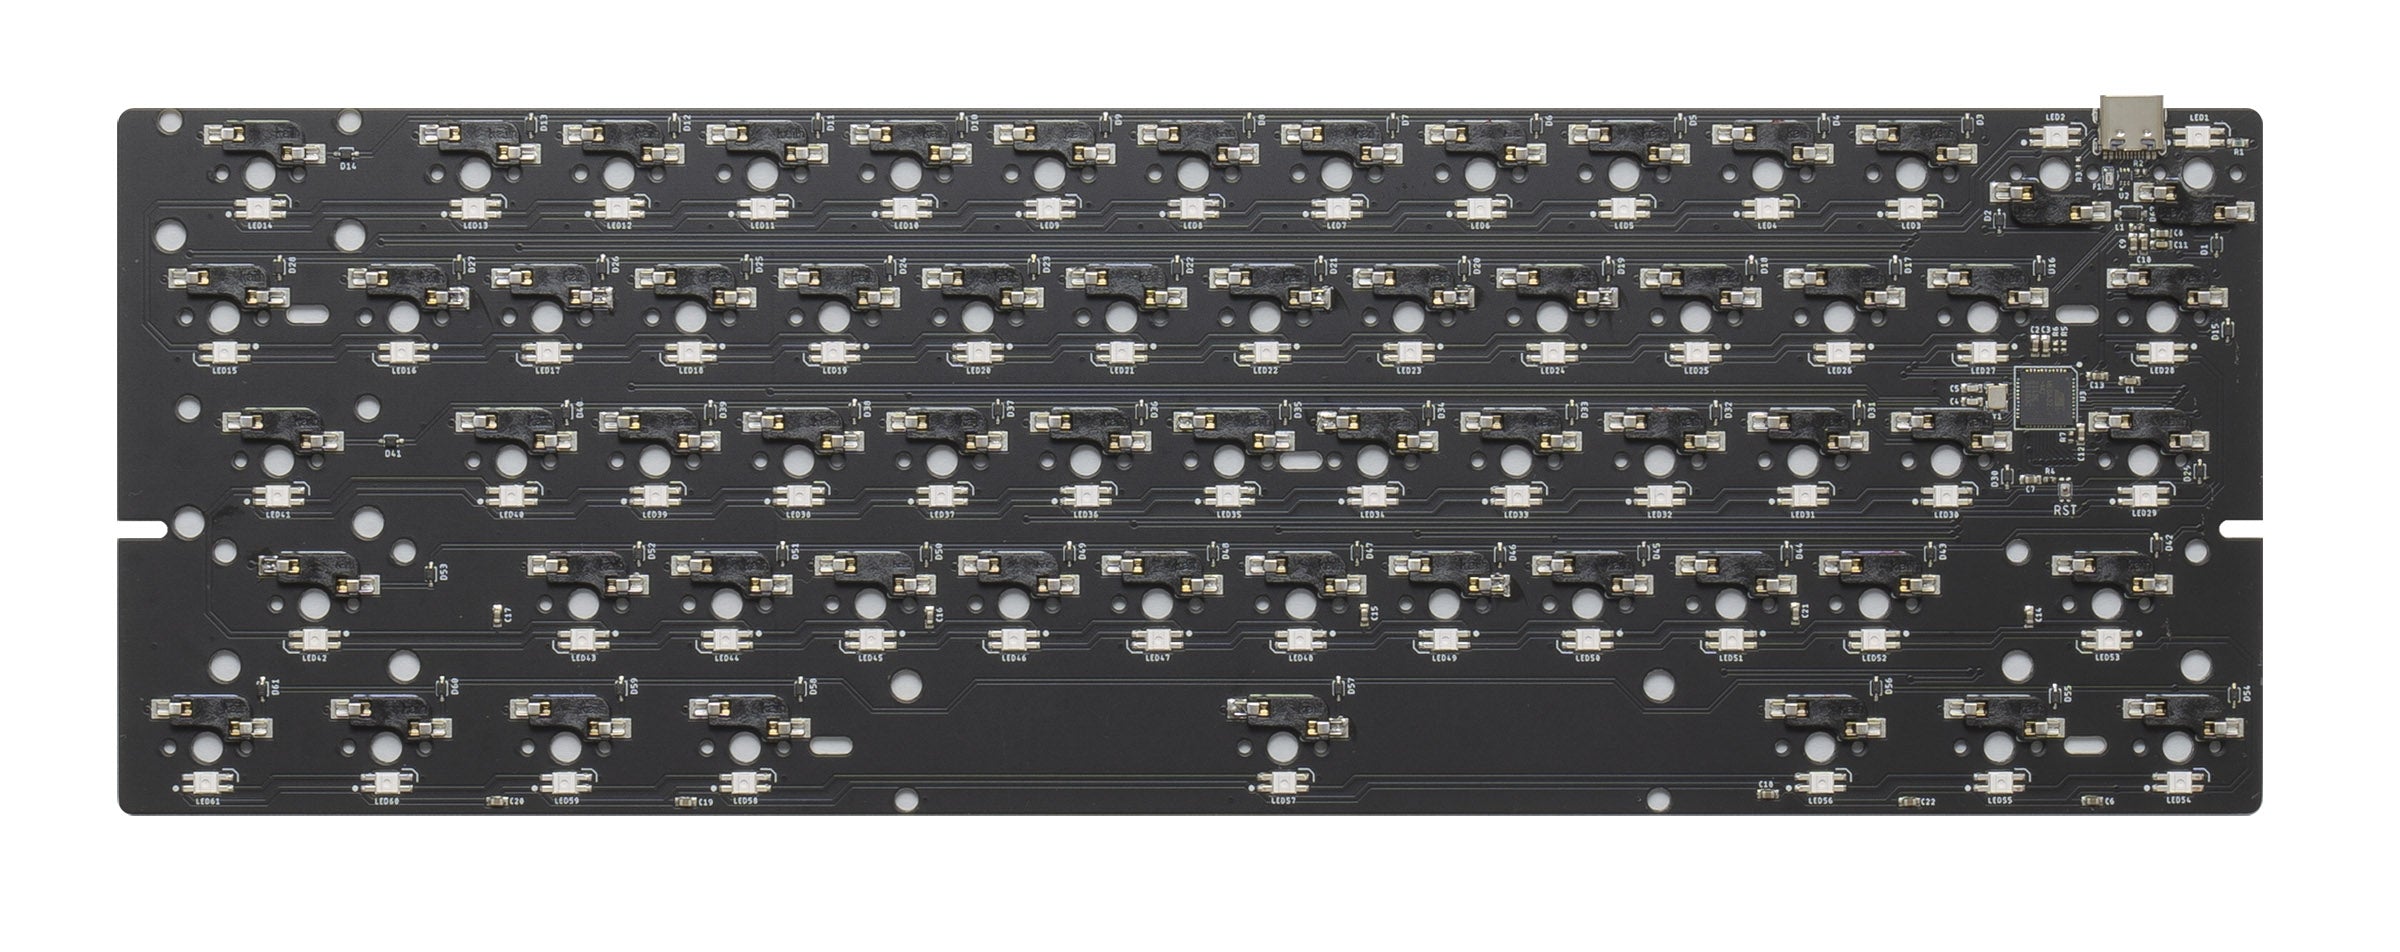 MK61 Hotswap PCB ANSI 60% RGB QMK VIA compatible MKH25UXYTO |28307|